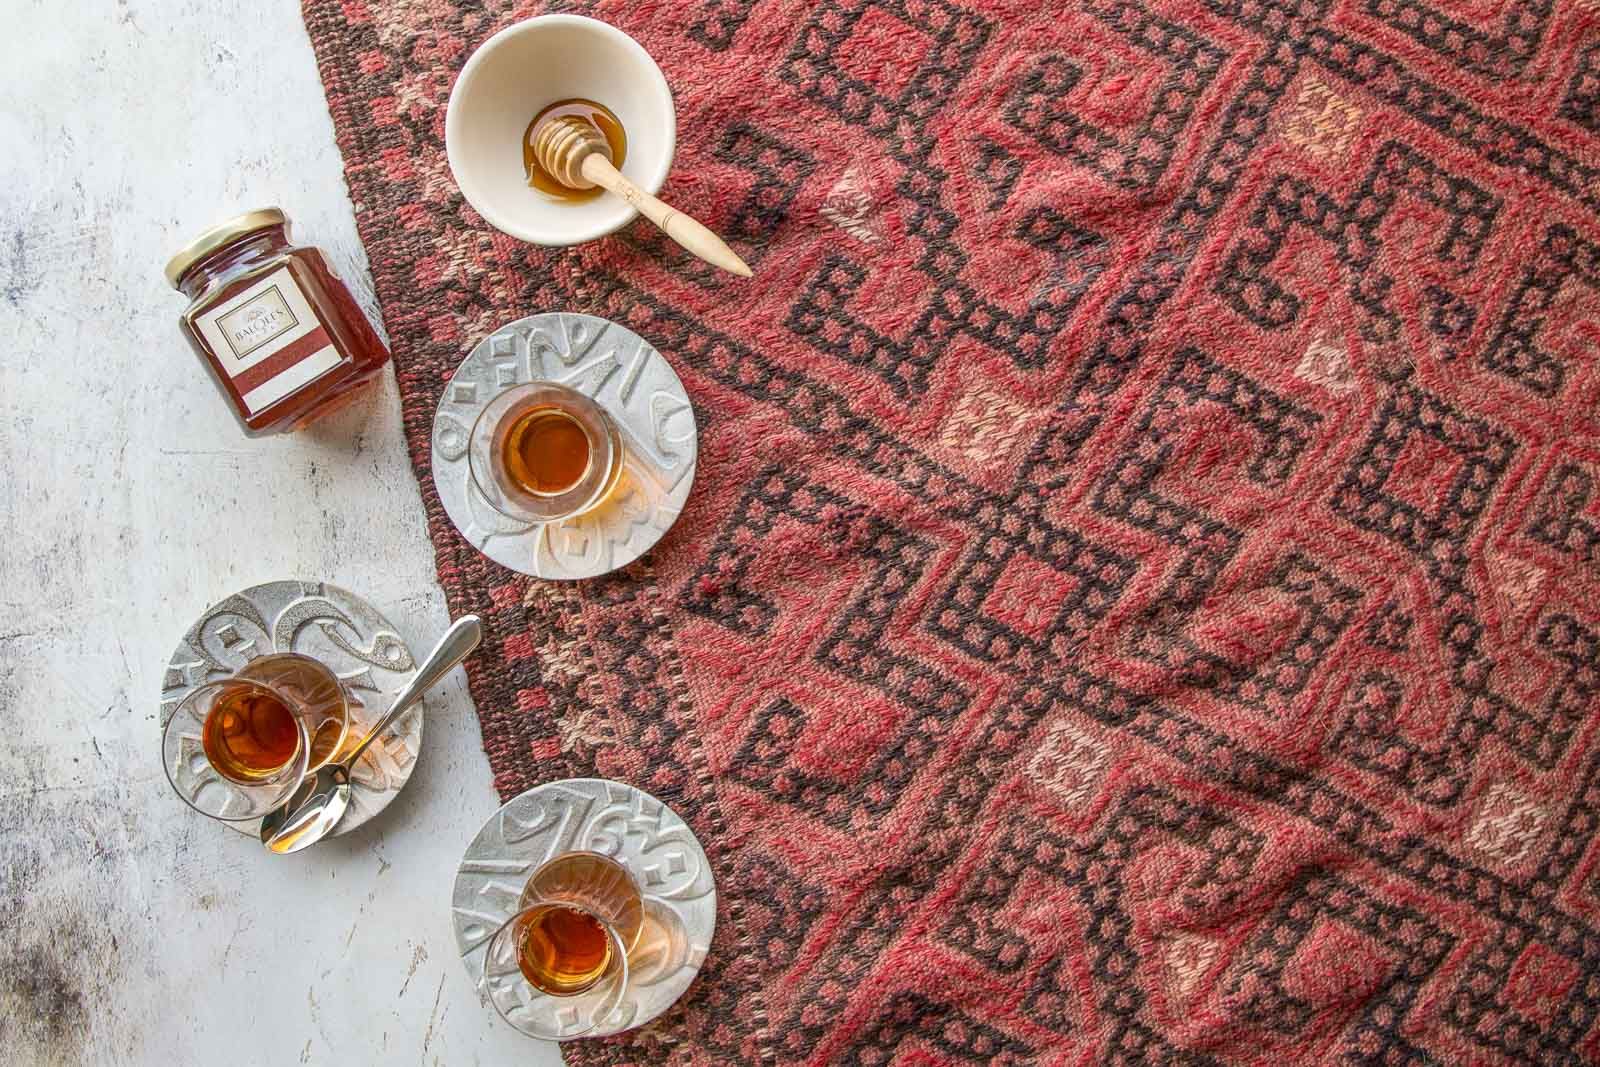 Arabic tea and honey by a carpet